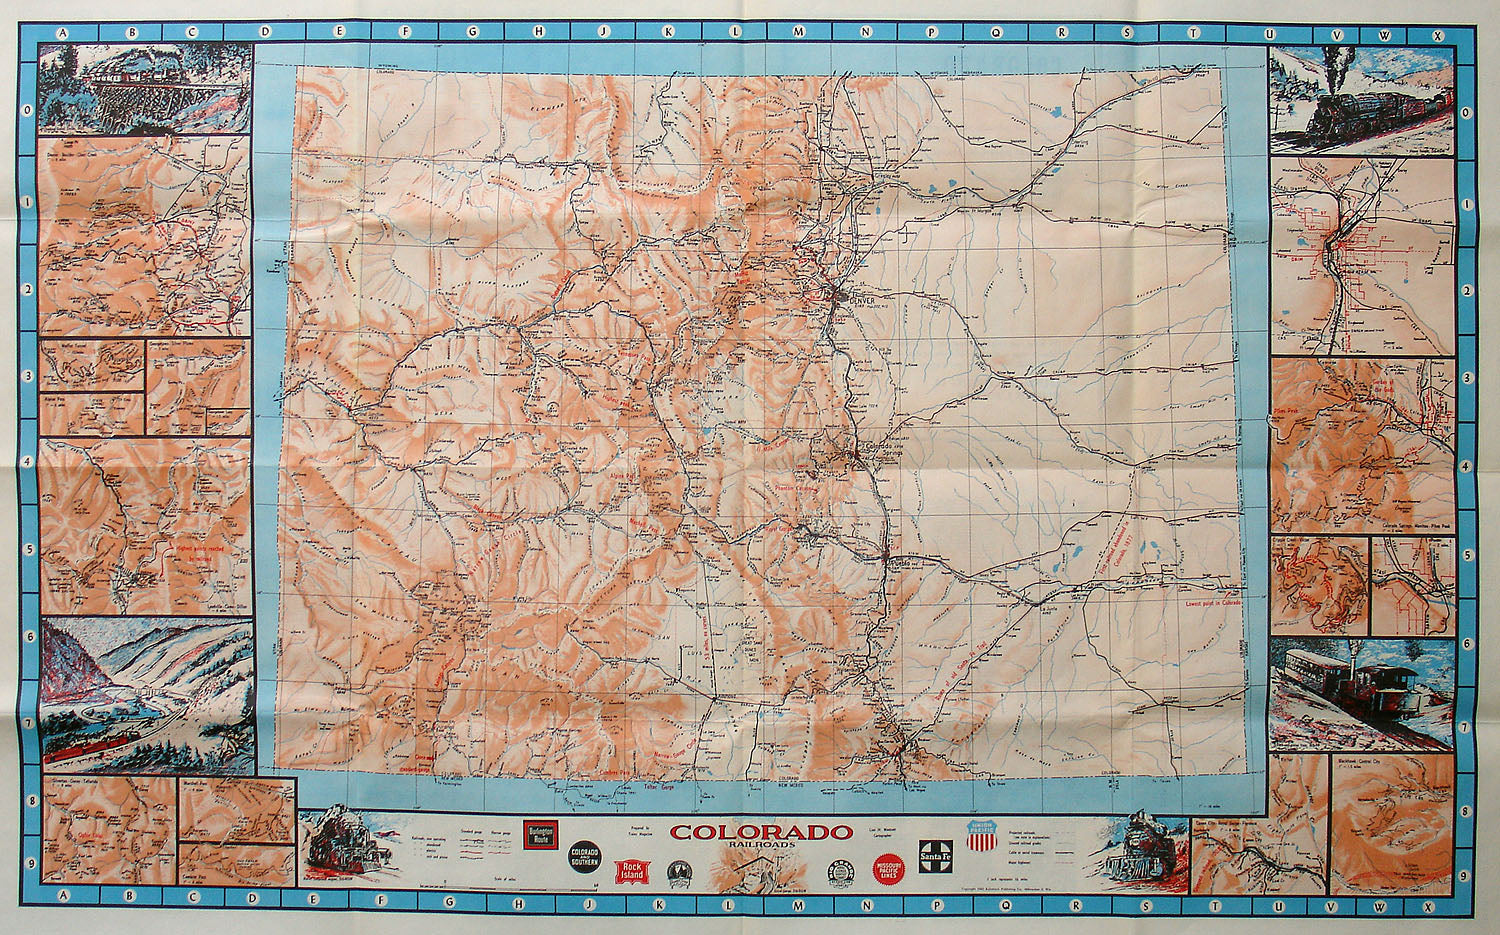 ca. 1900 map of the Colorado Midland Railway, unfortunately cropped at the  edges . circa 1900 337 Colorado Midland Railway map Stock Photo - Alamy